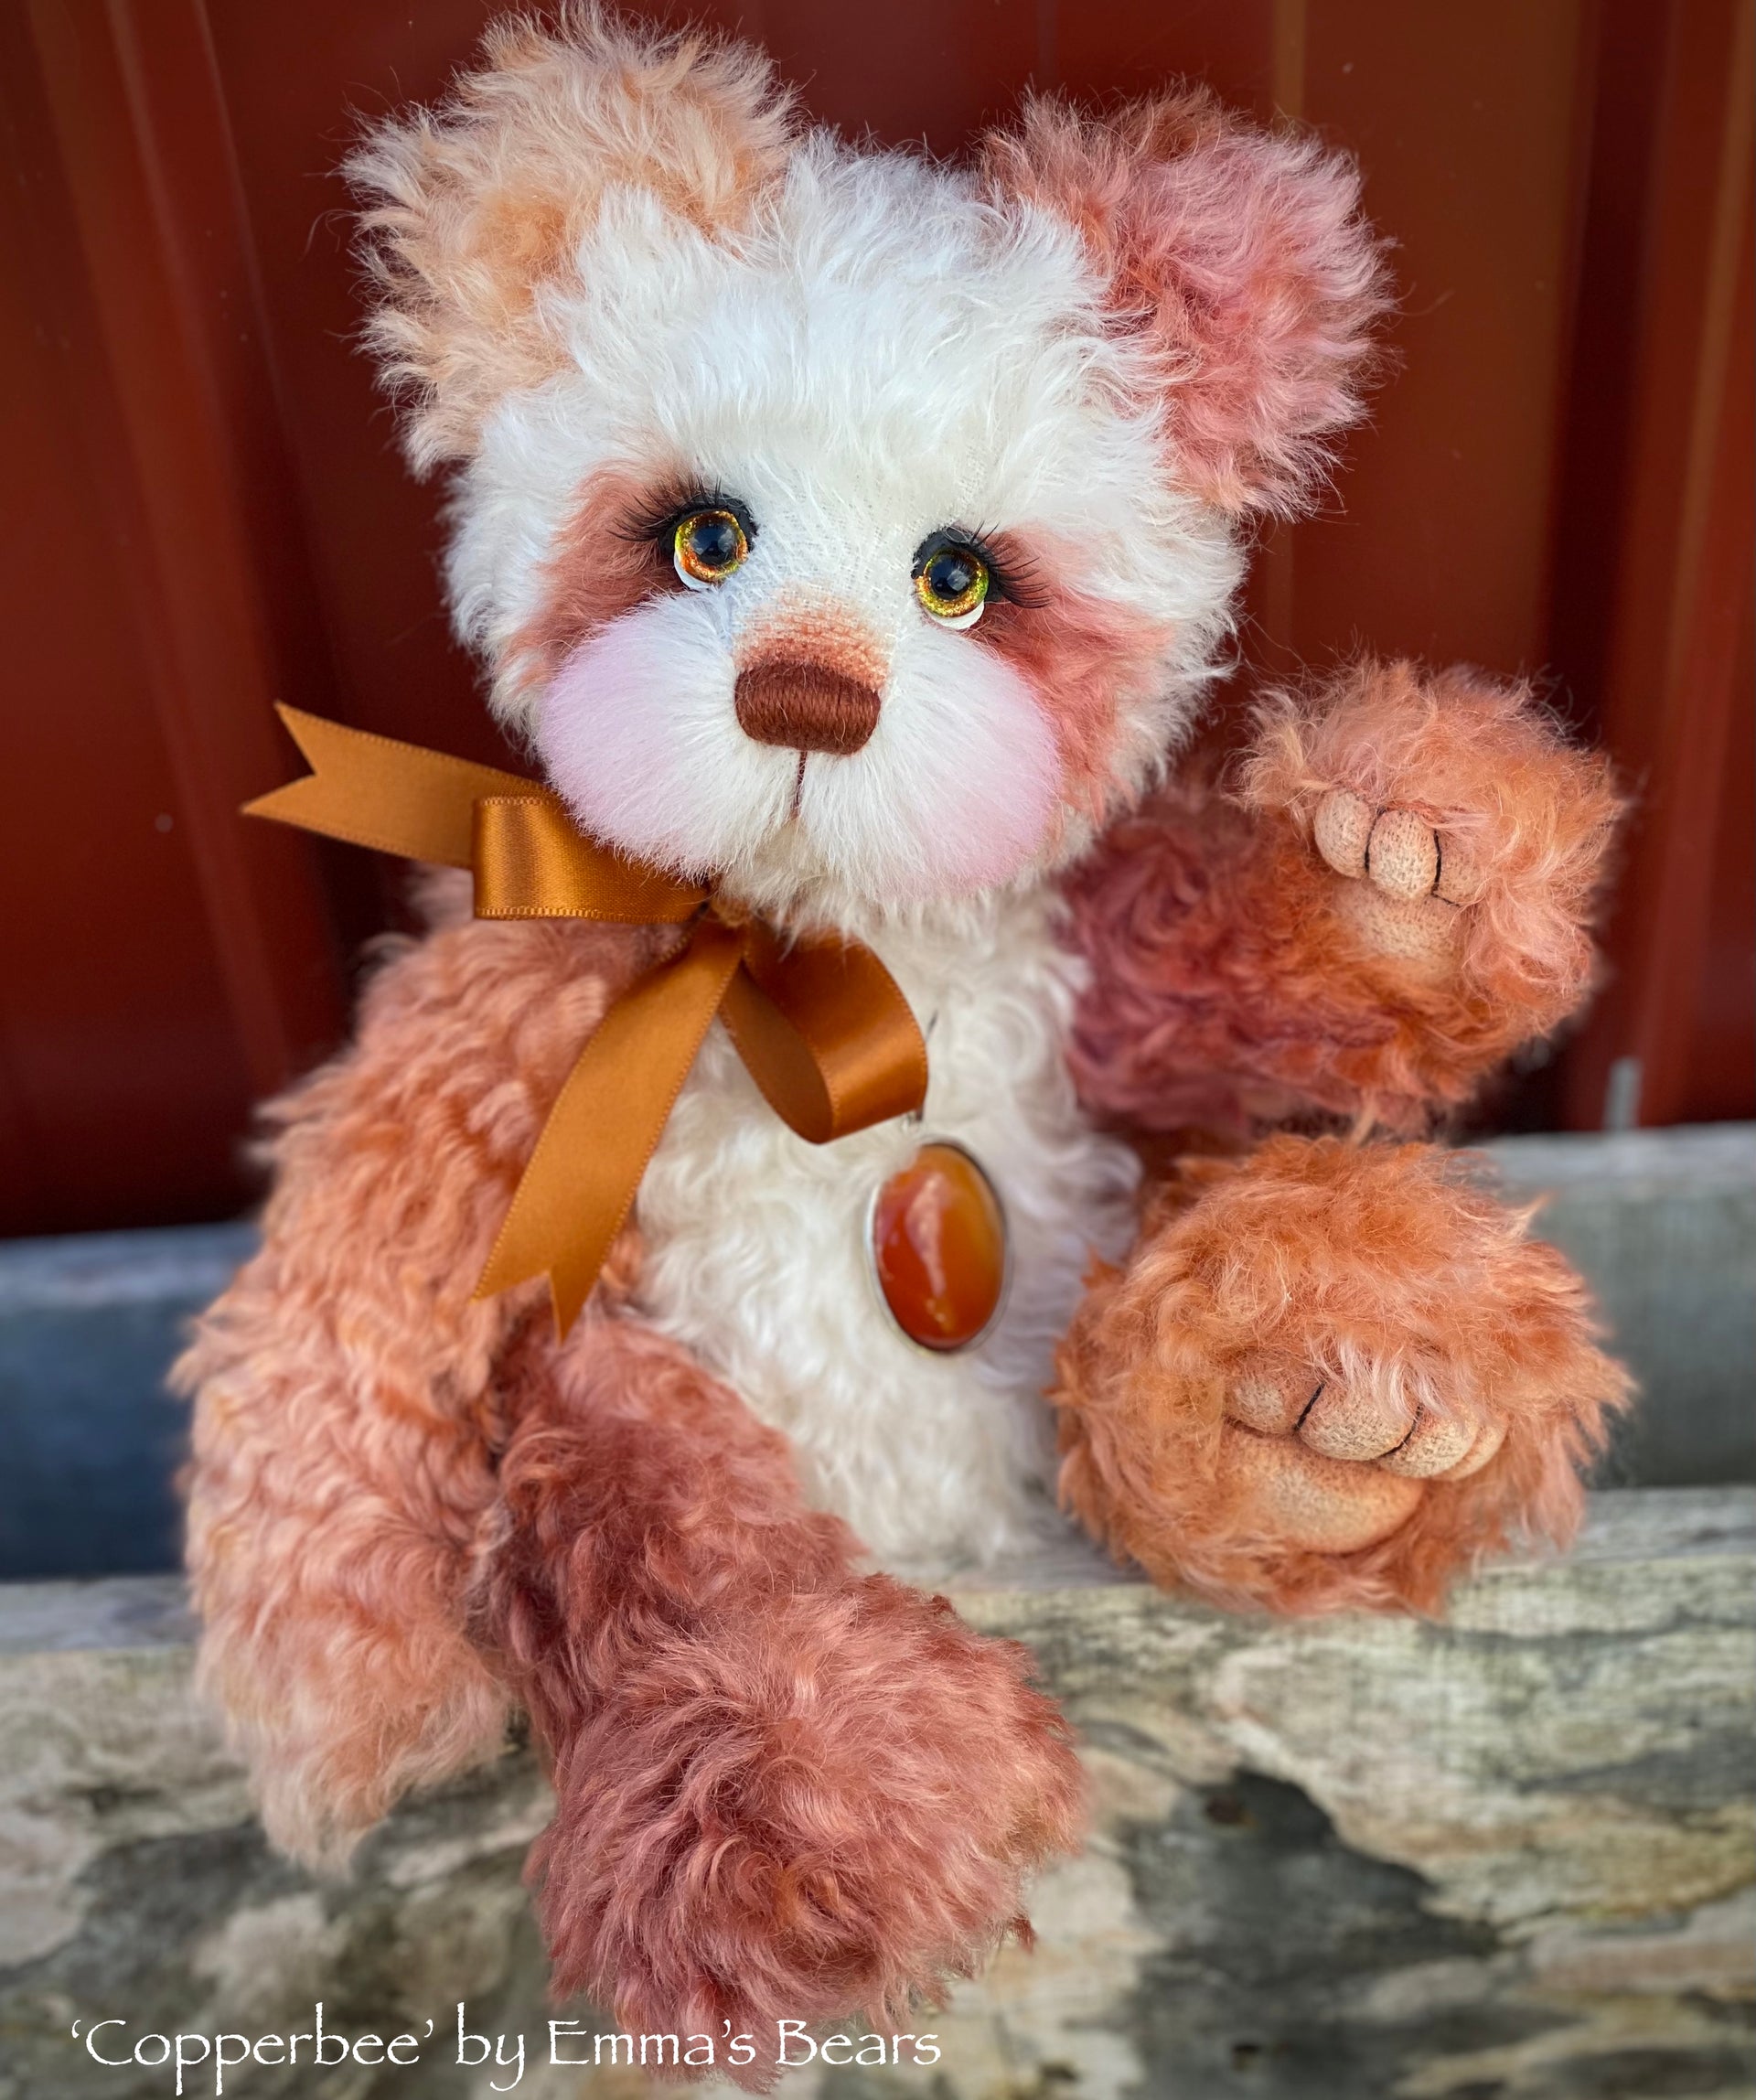 Copperbee - 12" Curly Kid Mohair and Alpaca artist bear by Emma's Bears - OOAK